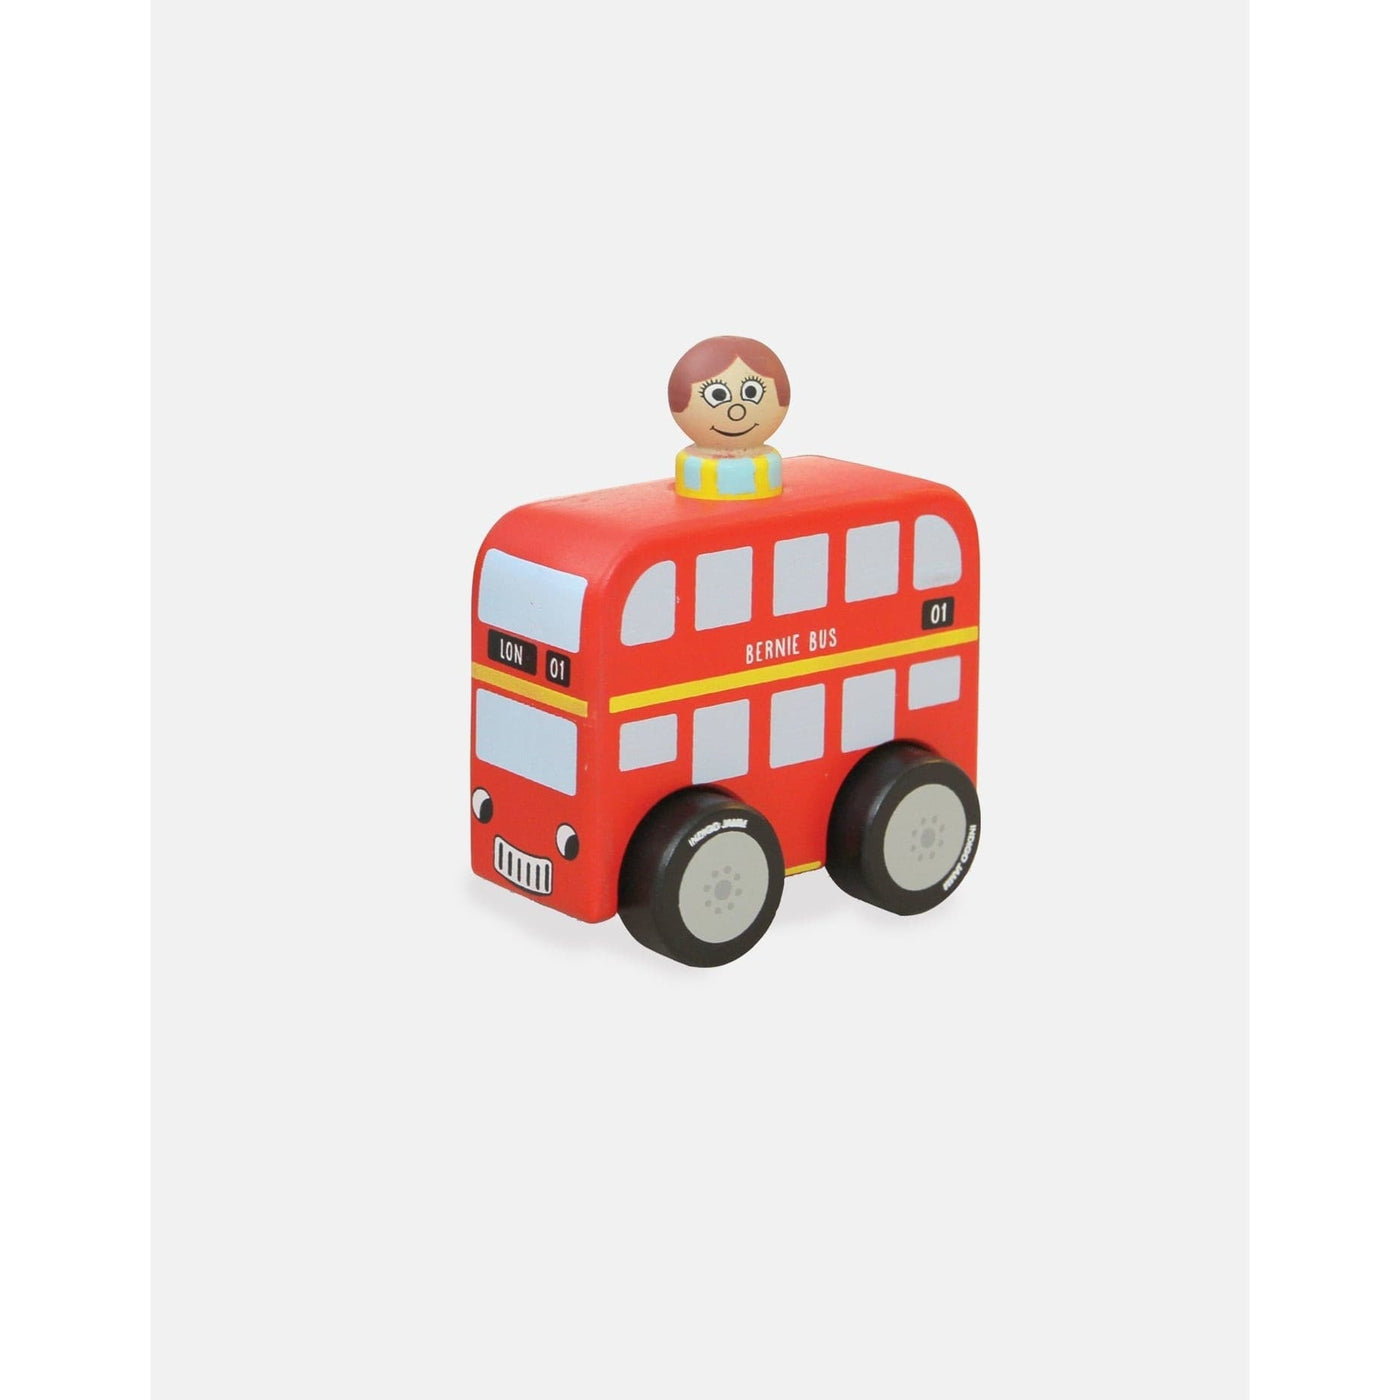 Mini Bernie Bus & Evelyn-Toy Vehicles-Indigo Jamm-Yes Bebe